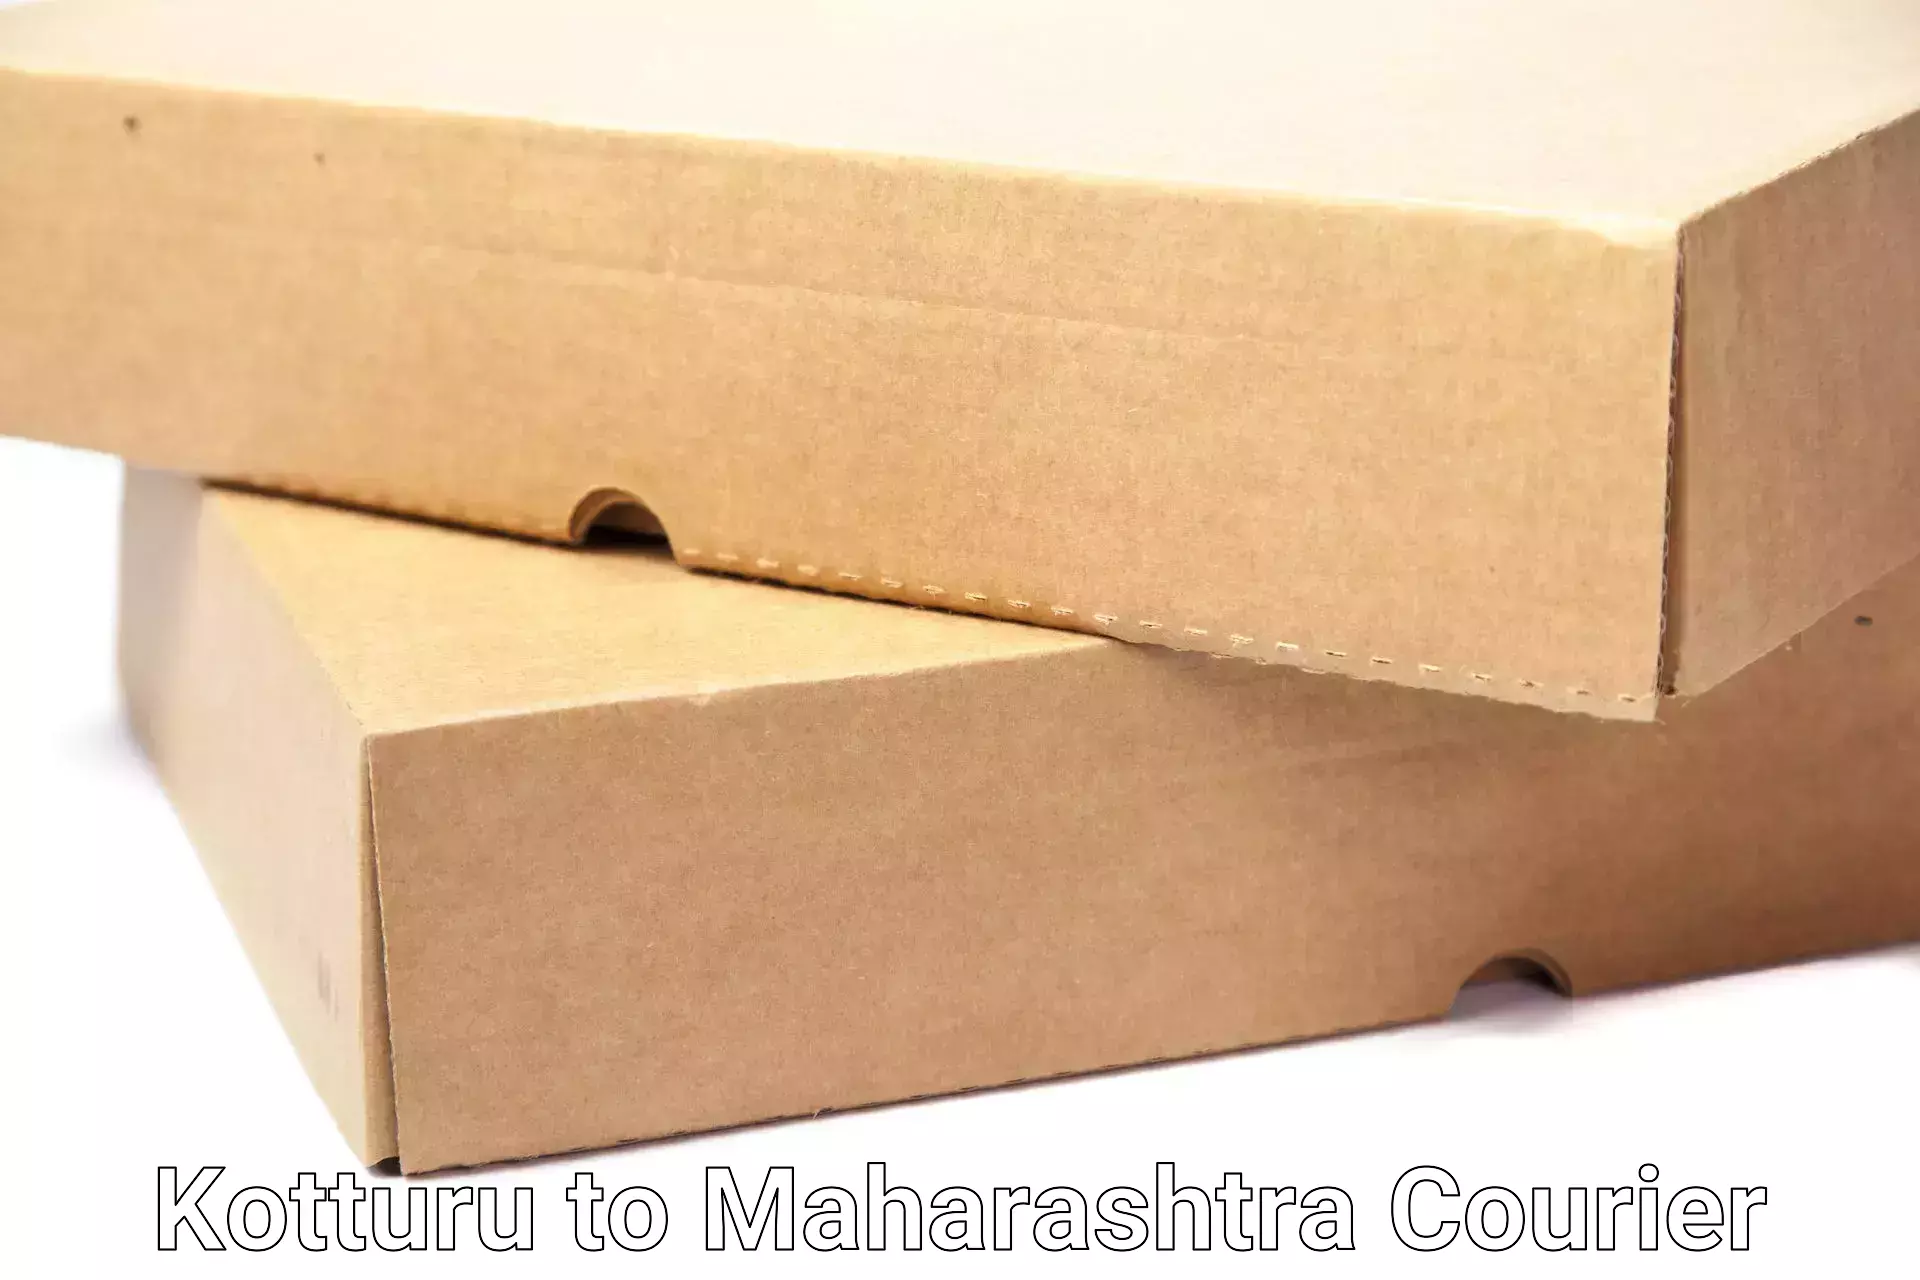 Furniture transport experts Kotturu to Maharashtra